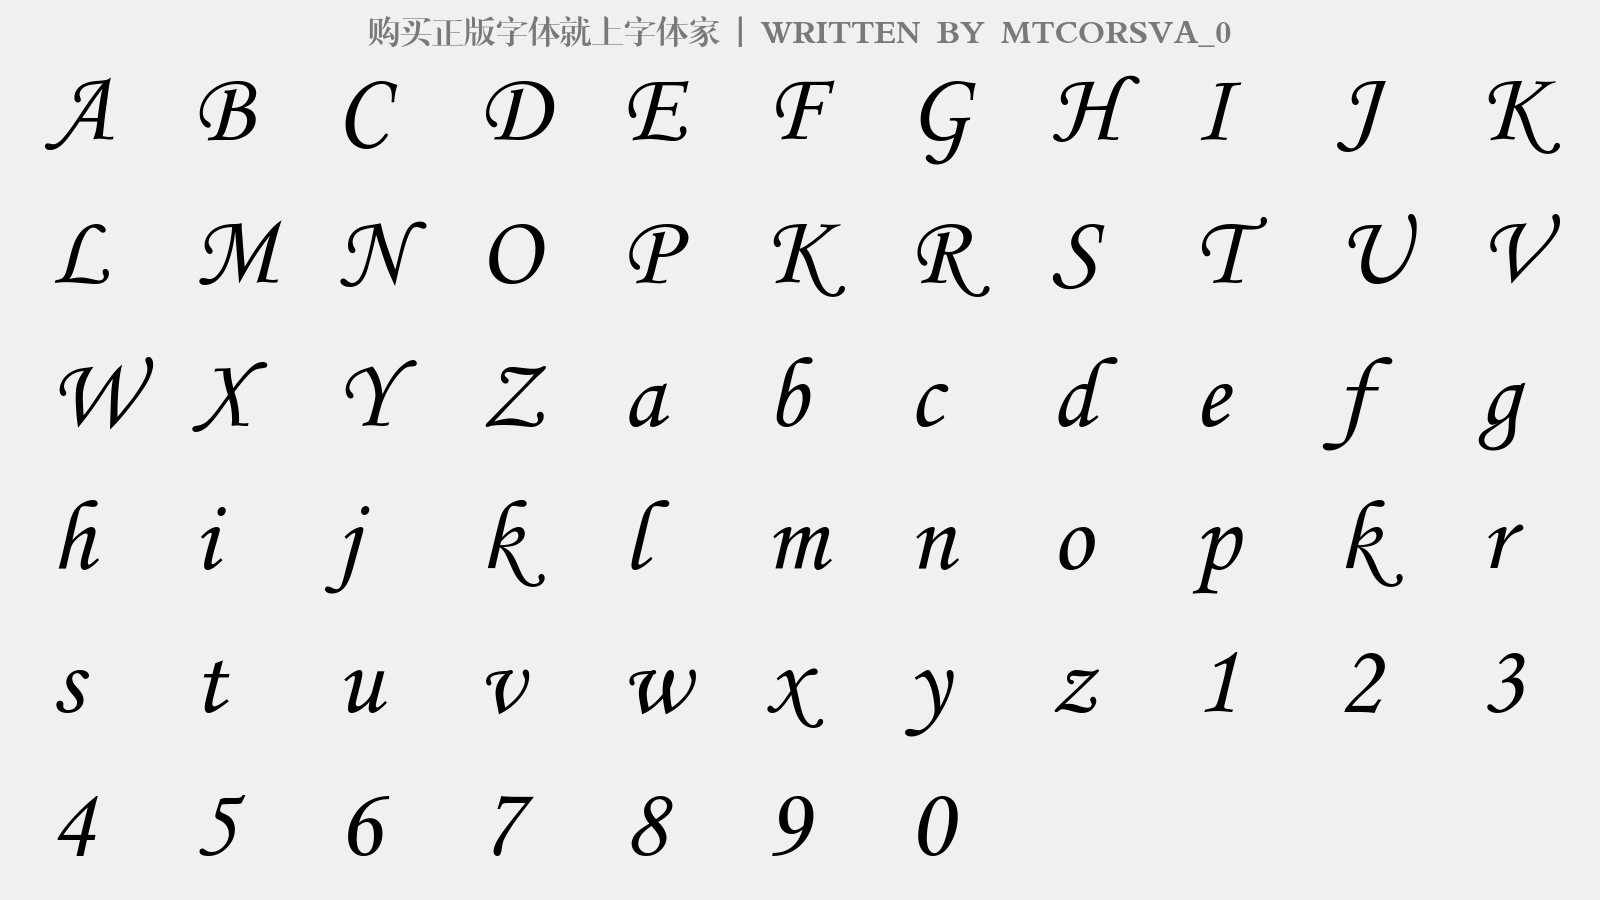 MTCORSVA_0 - 大写字母/小写字母/数字